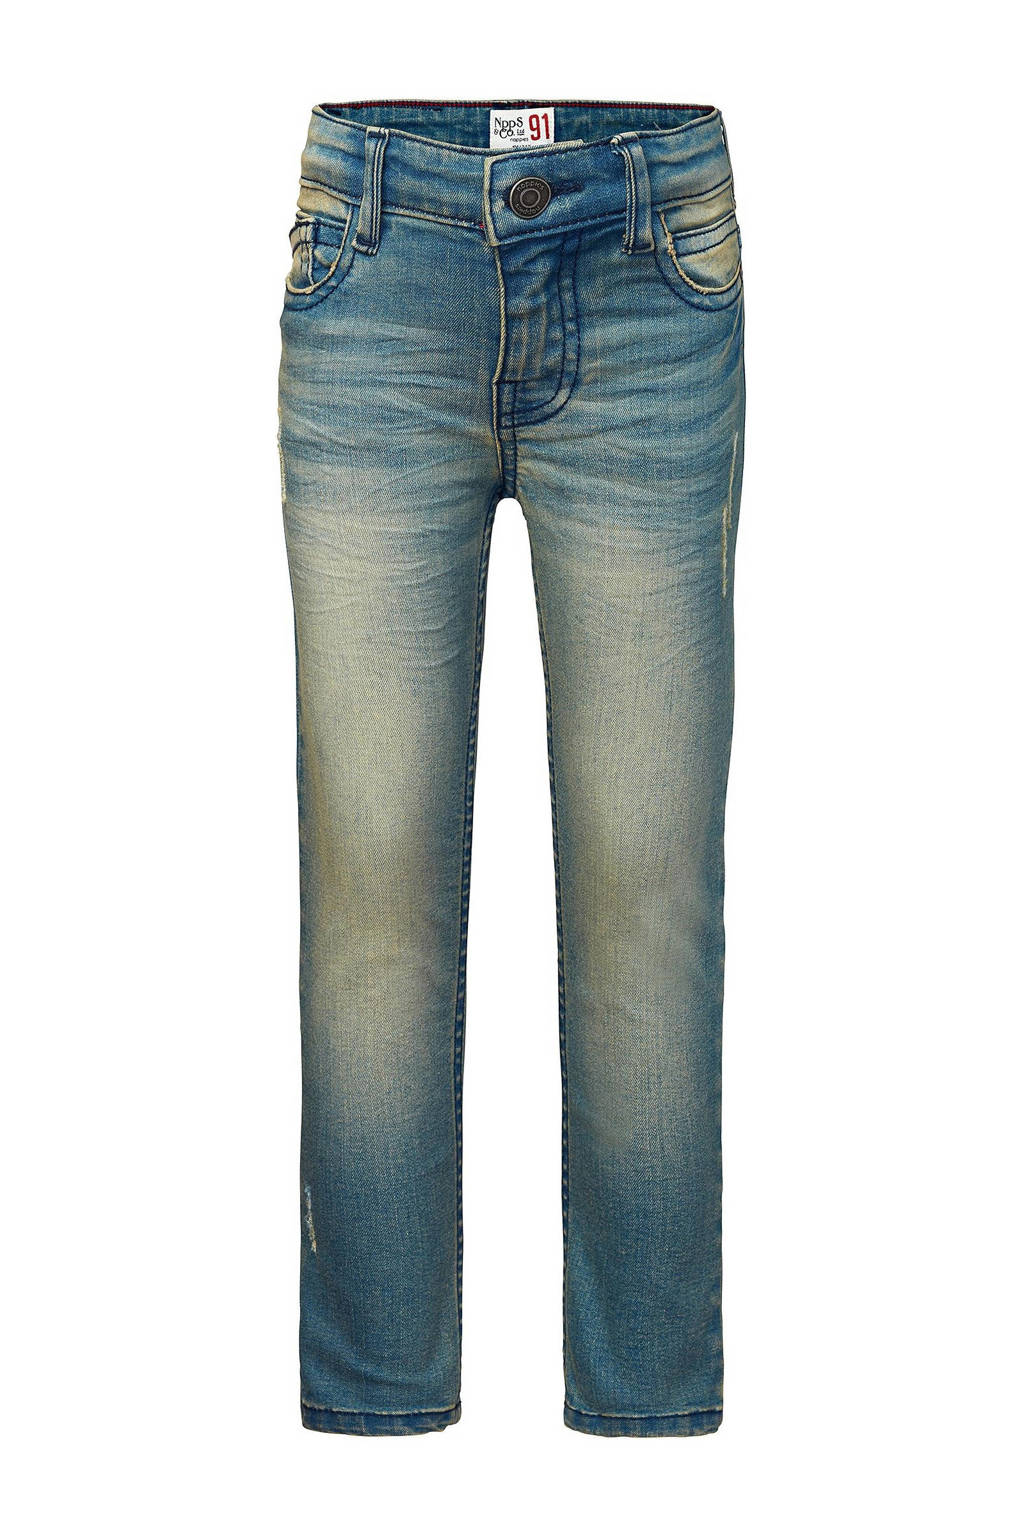 Noppies skinny jeans Gdansk blauw